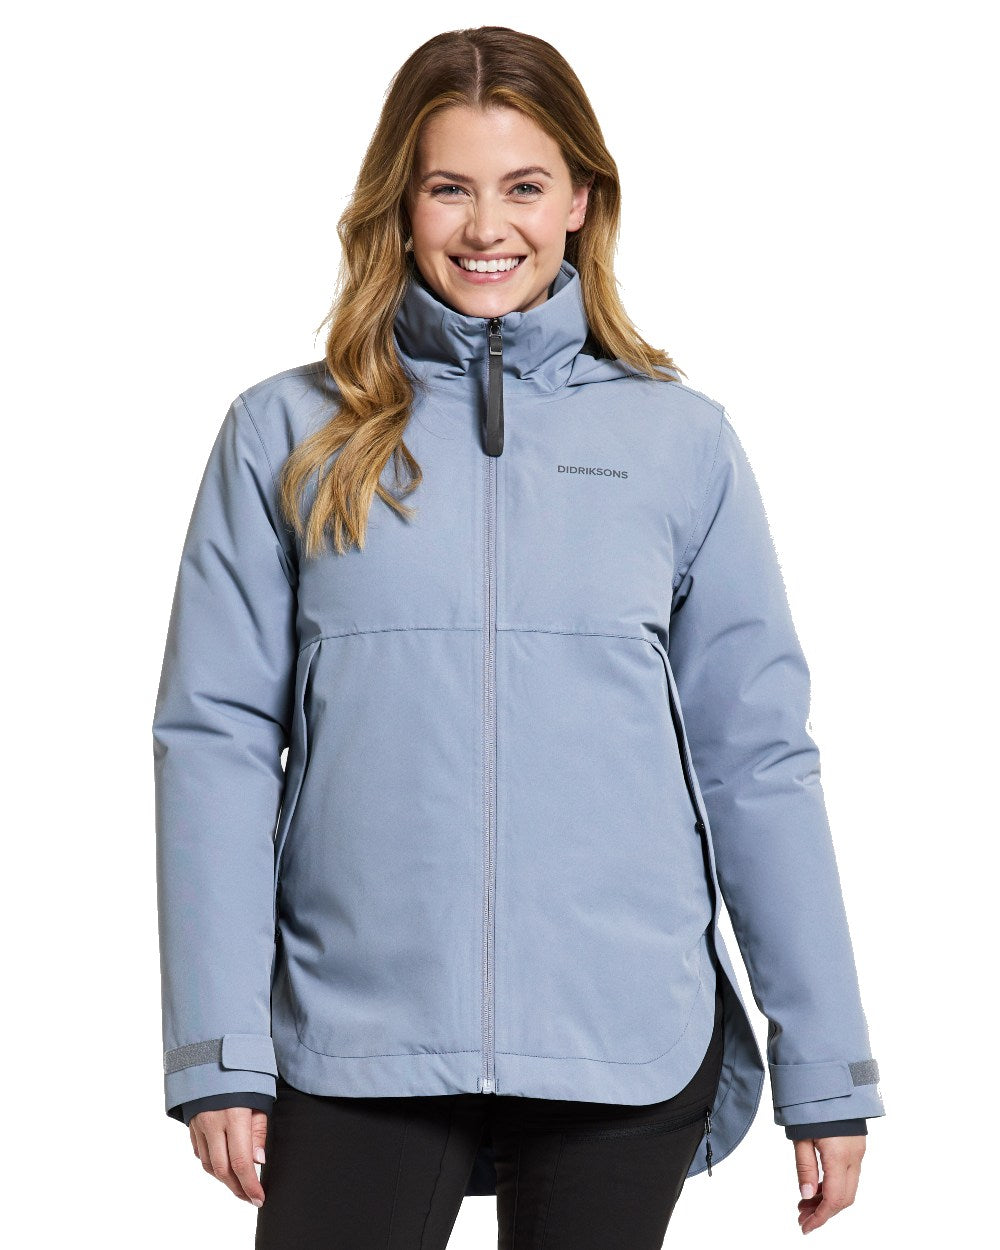 Didriksons Jennie Womens Jacket in Glacial Blue 